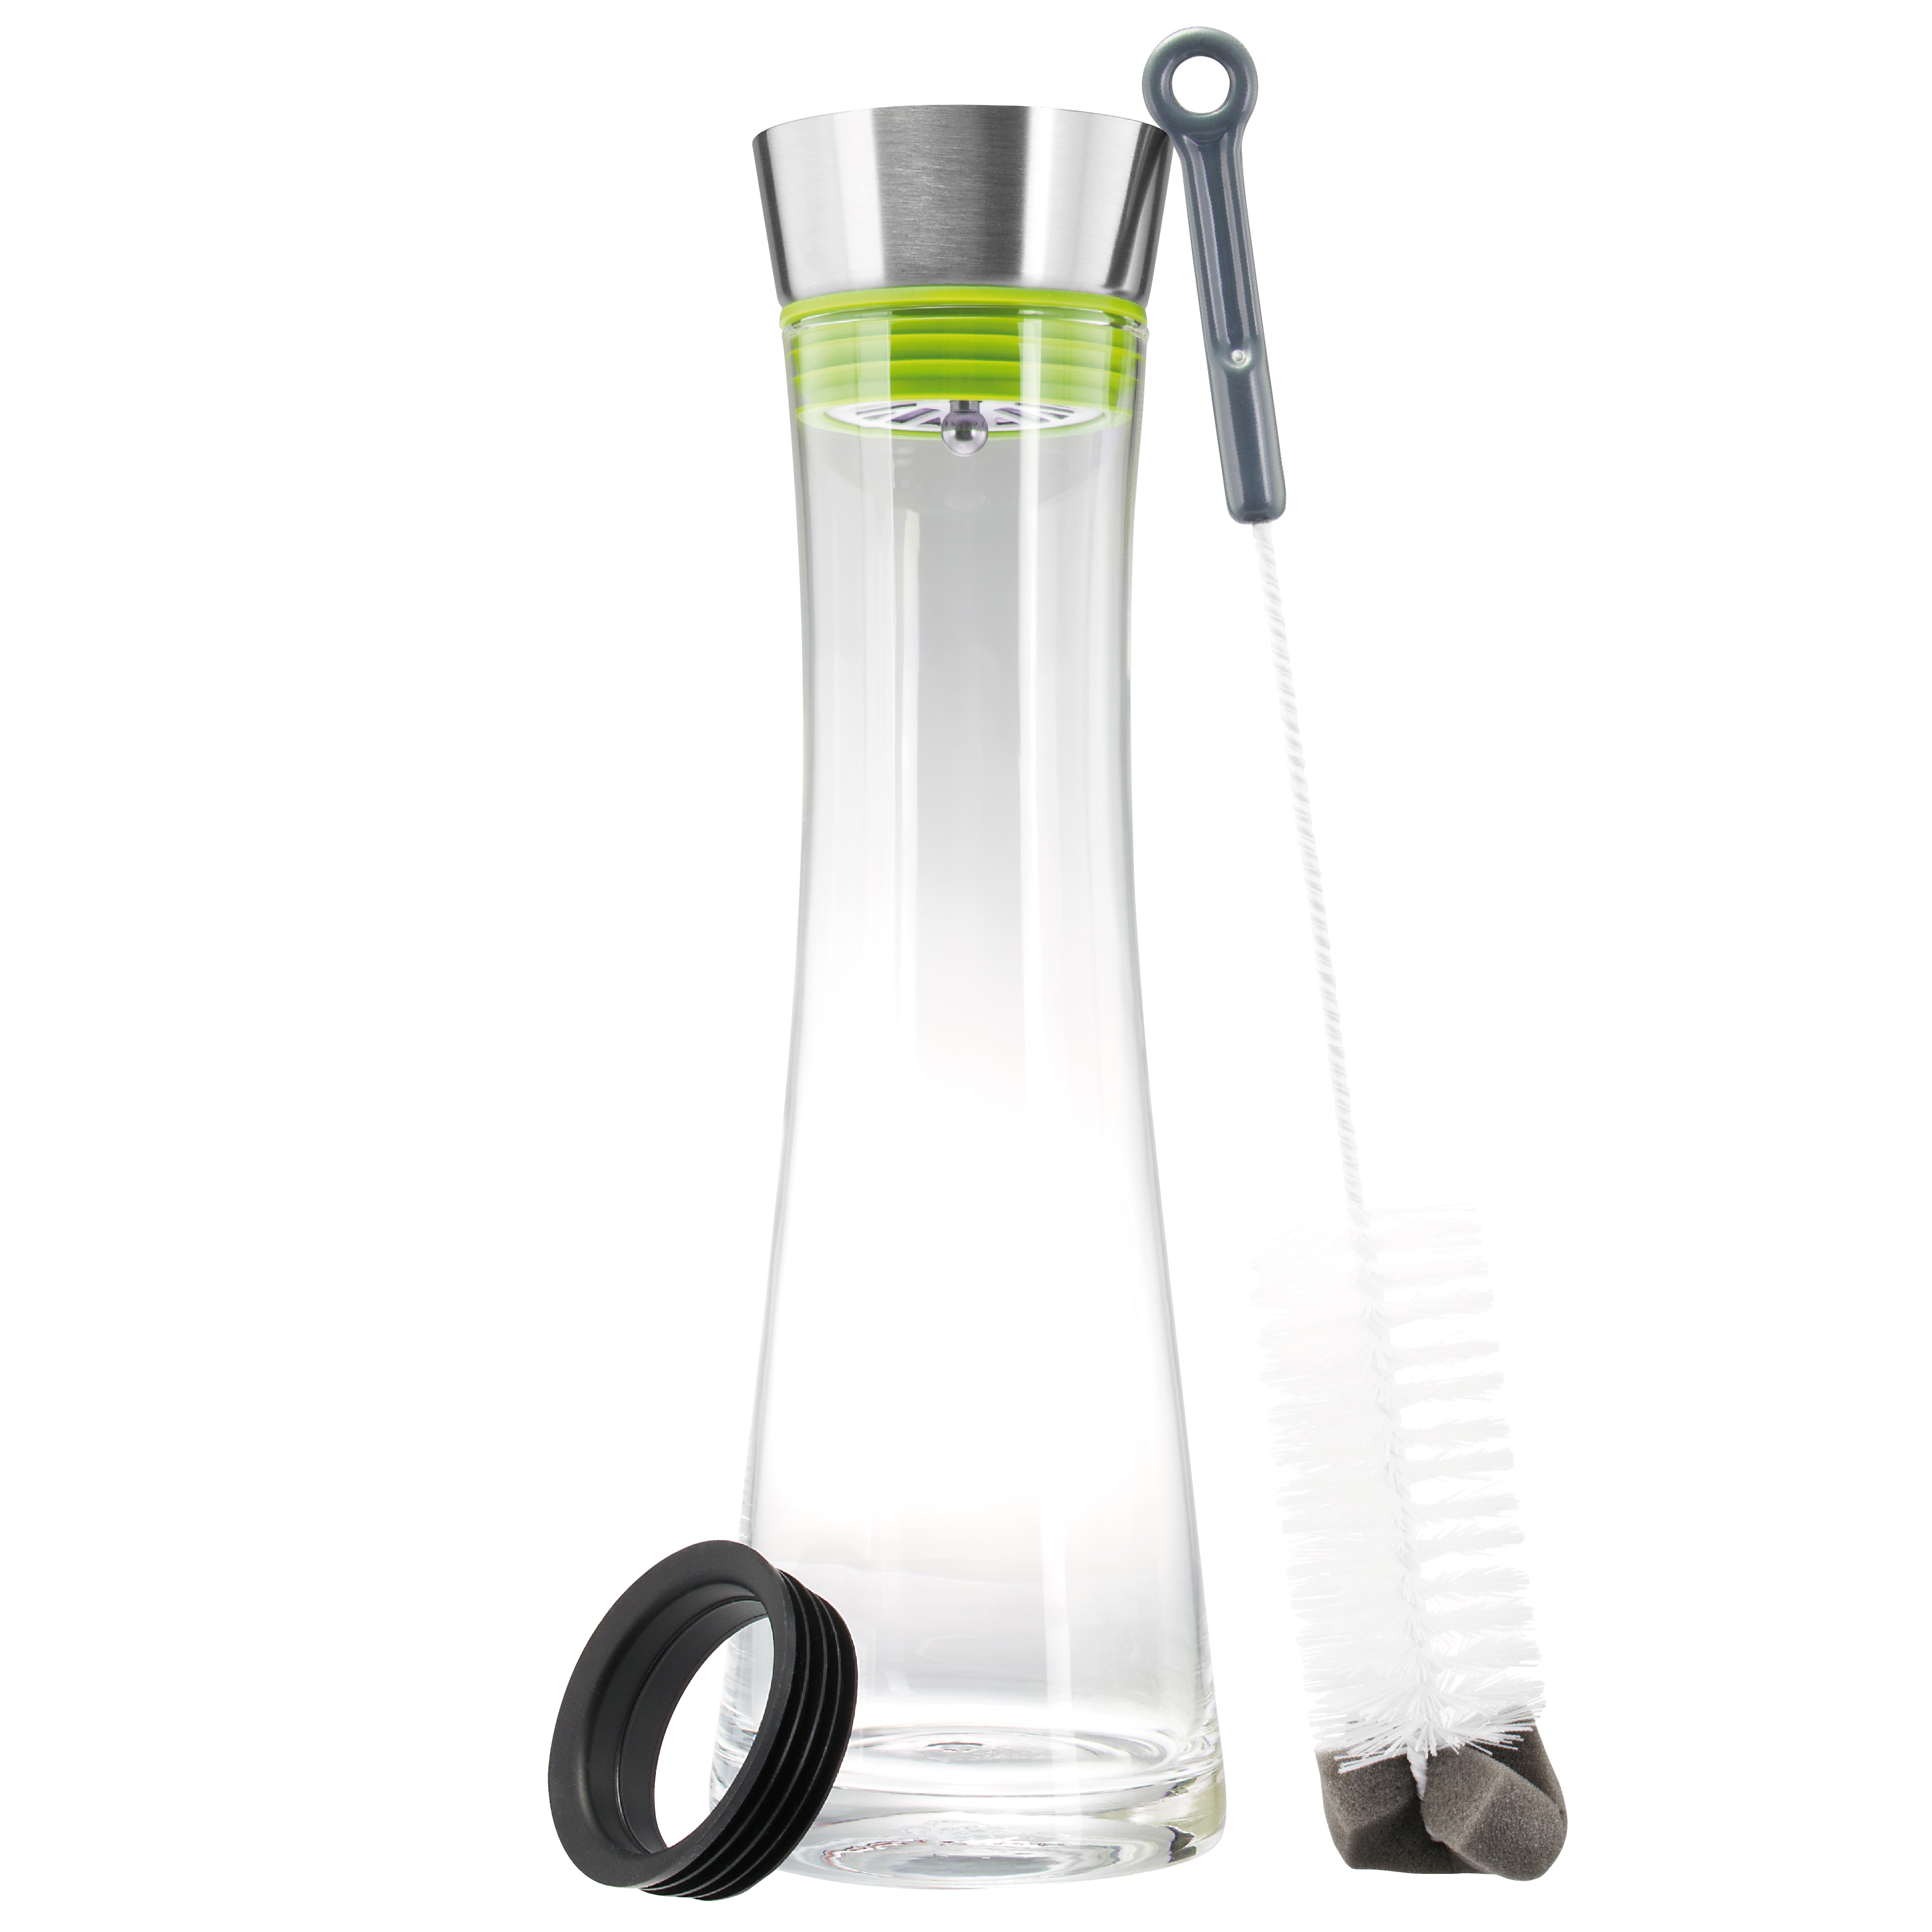 bremermann Glaskaraffe SVEA 1,2 Liter mit praktischem Edelstahlausgießer, matt, Silikonringfarbe grün